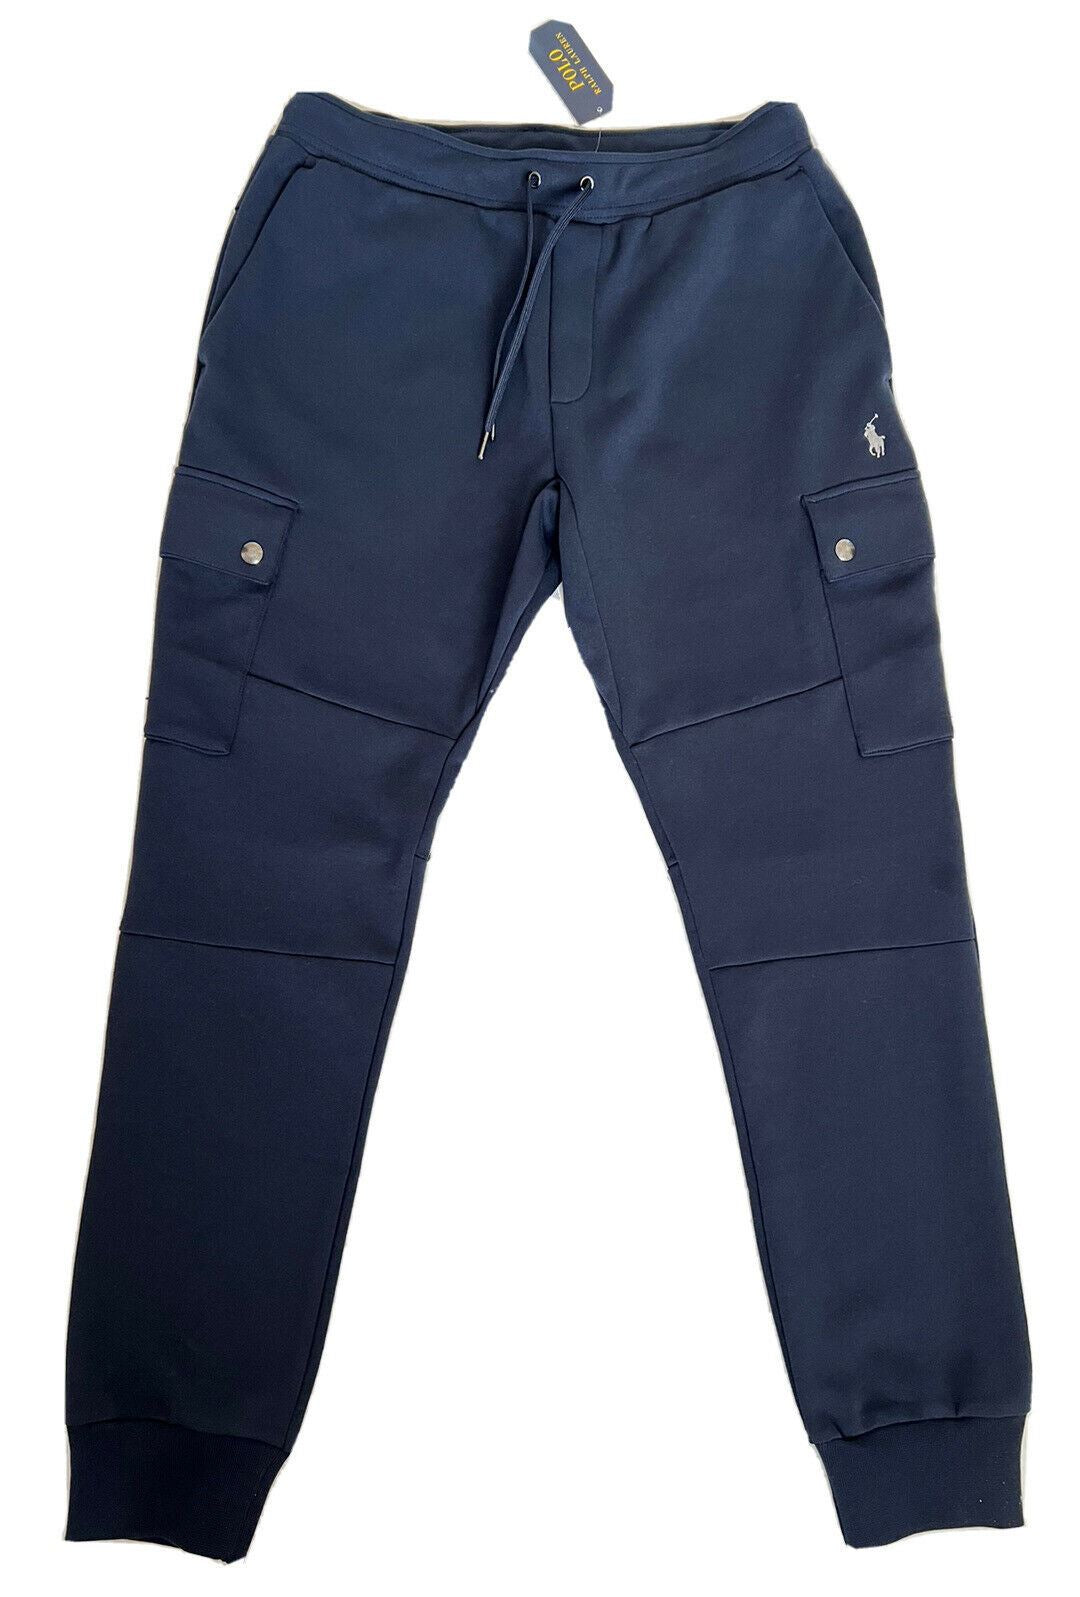 NWT $148 Polo Ralph Lauren Men's Pocket Aviator Navy Casual Pants Small